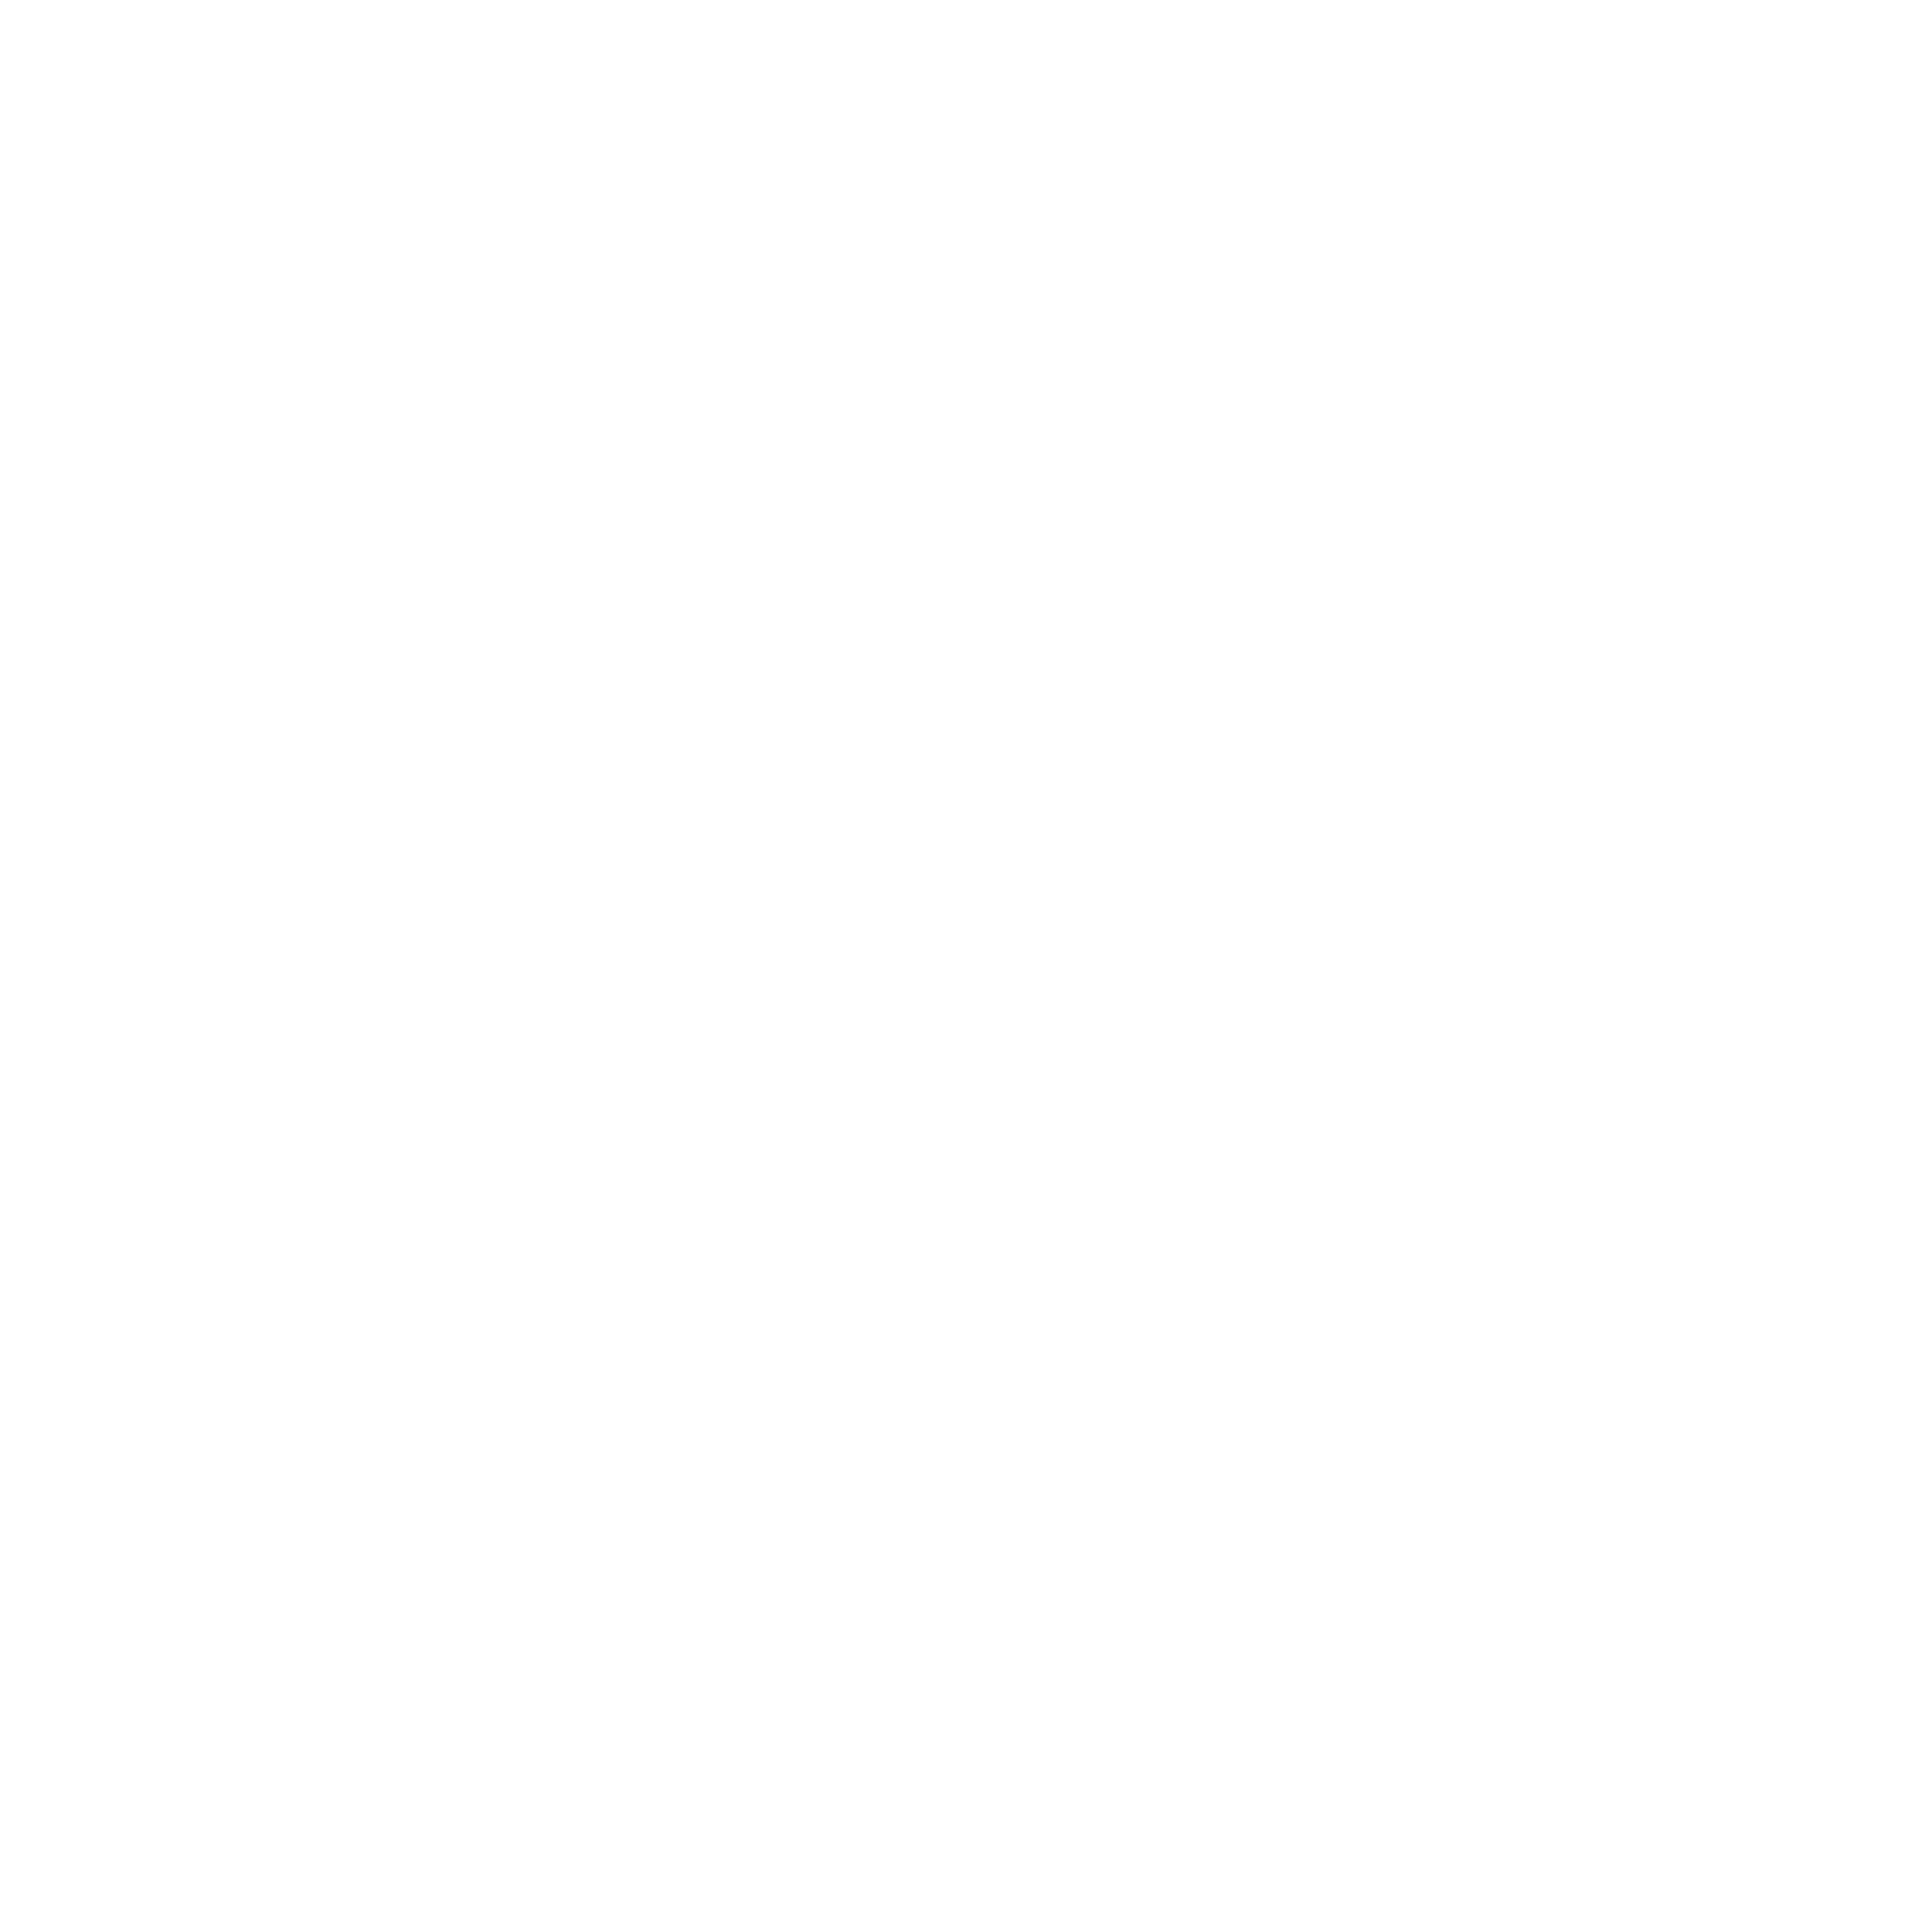 Logo Elena D'Erchie